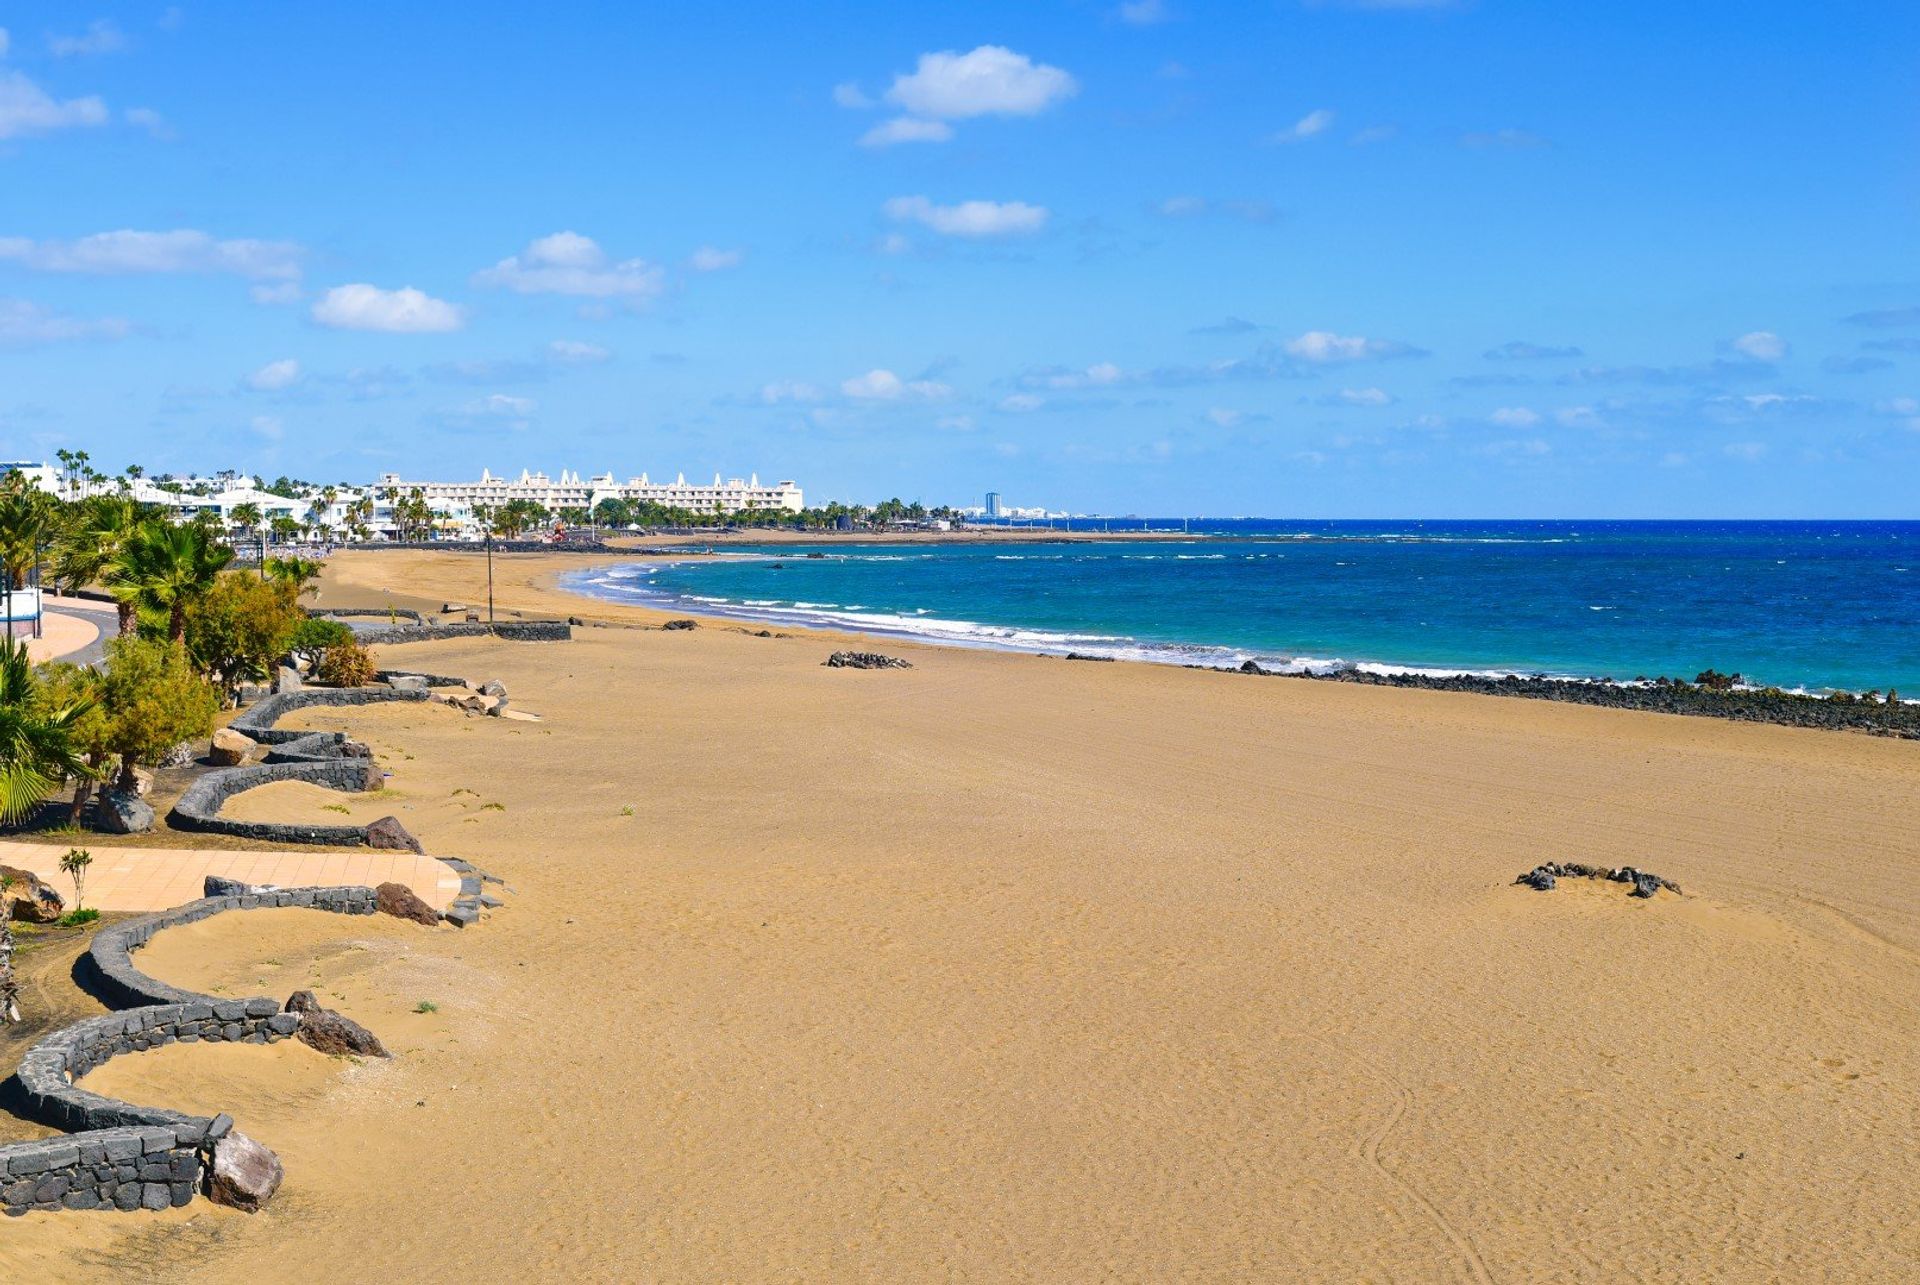 Blue Flag Matagorda beach near Puerto del Carmen has its own nature park